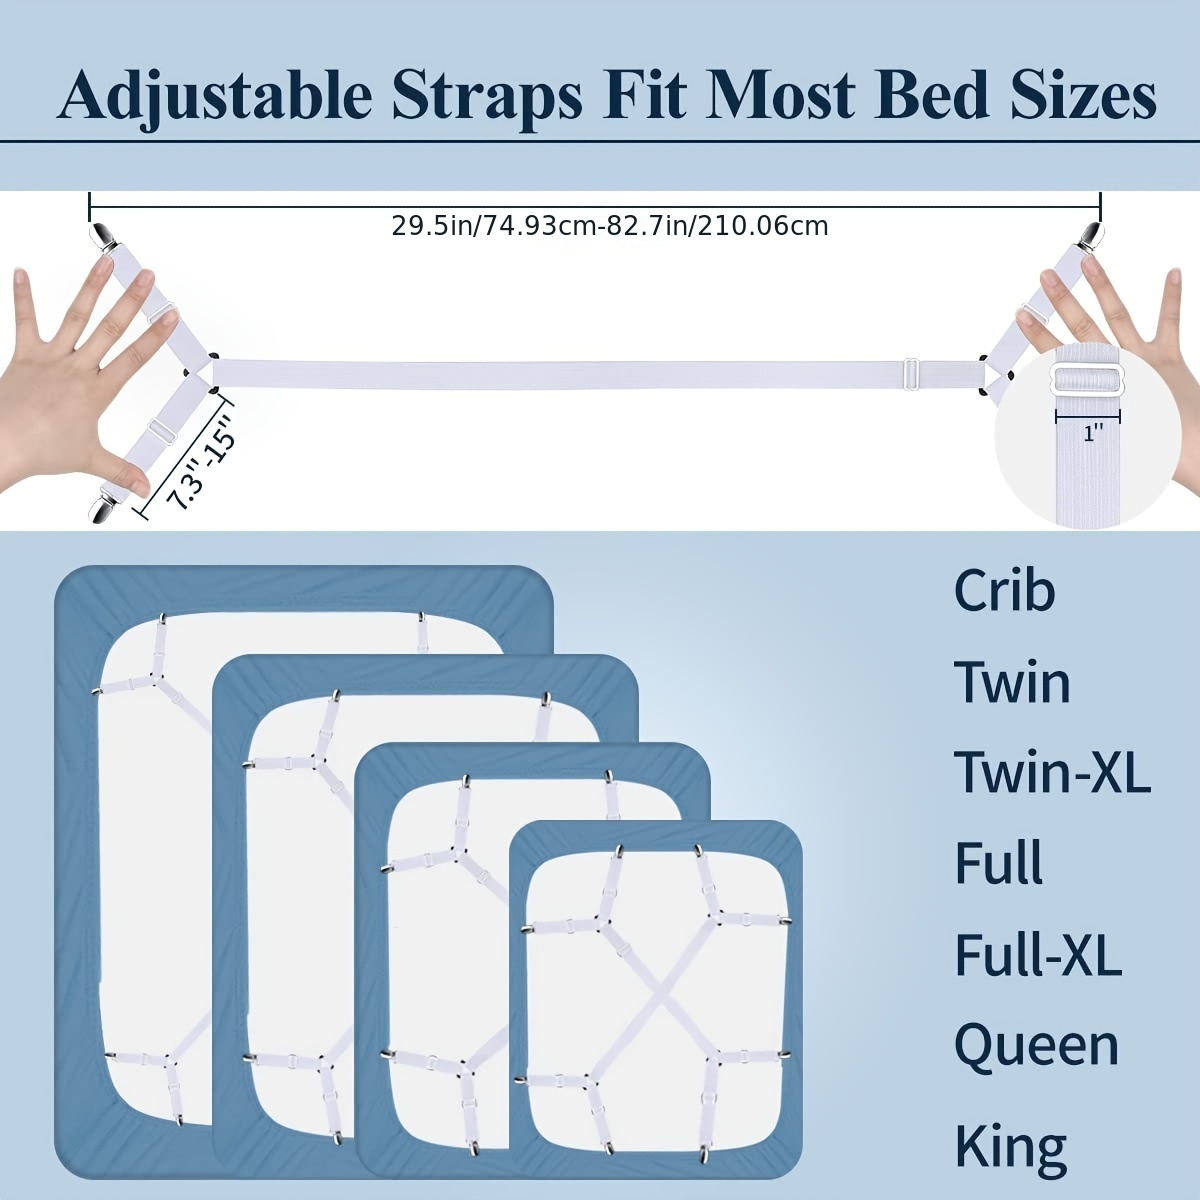 Siaomo Bed Sheet Clip Straps - 2 Way Adjustable Crisscross Sheet